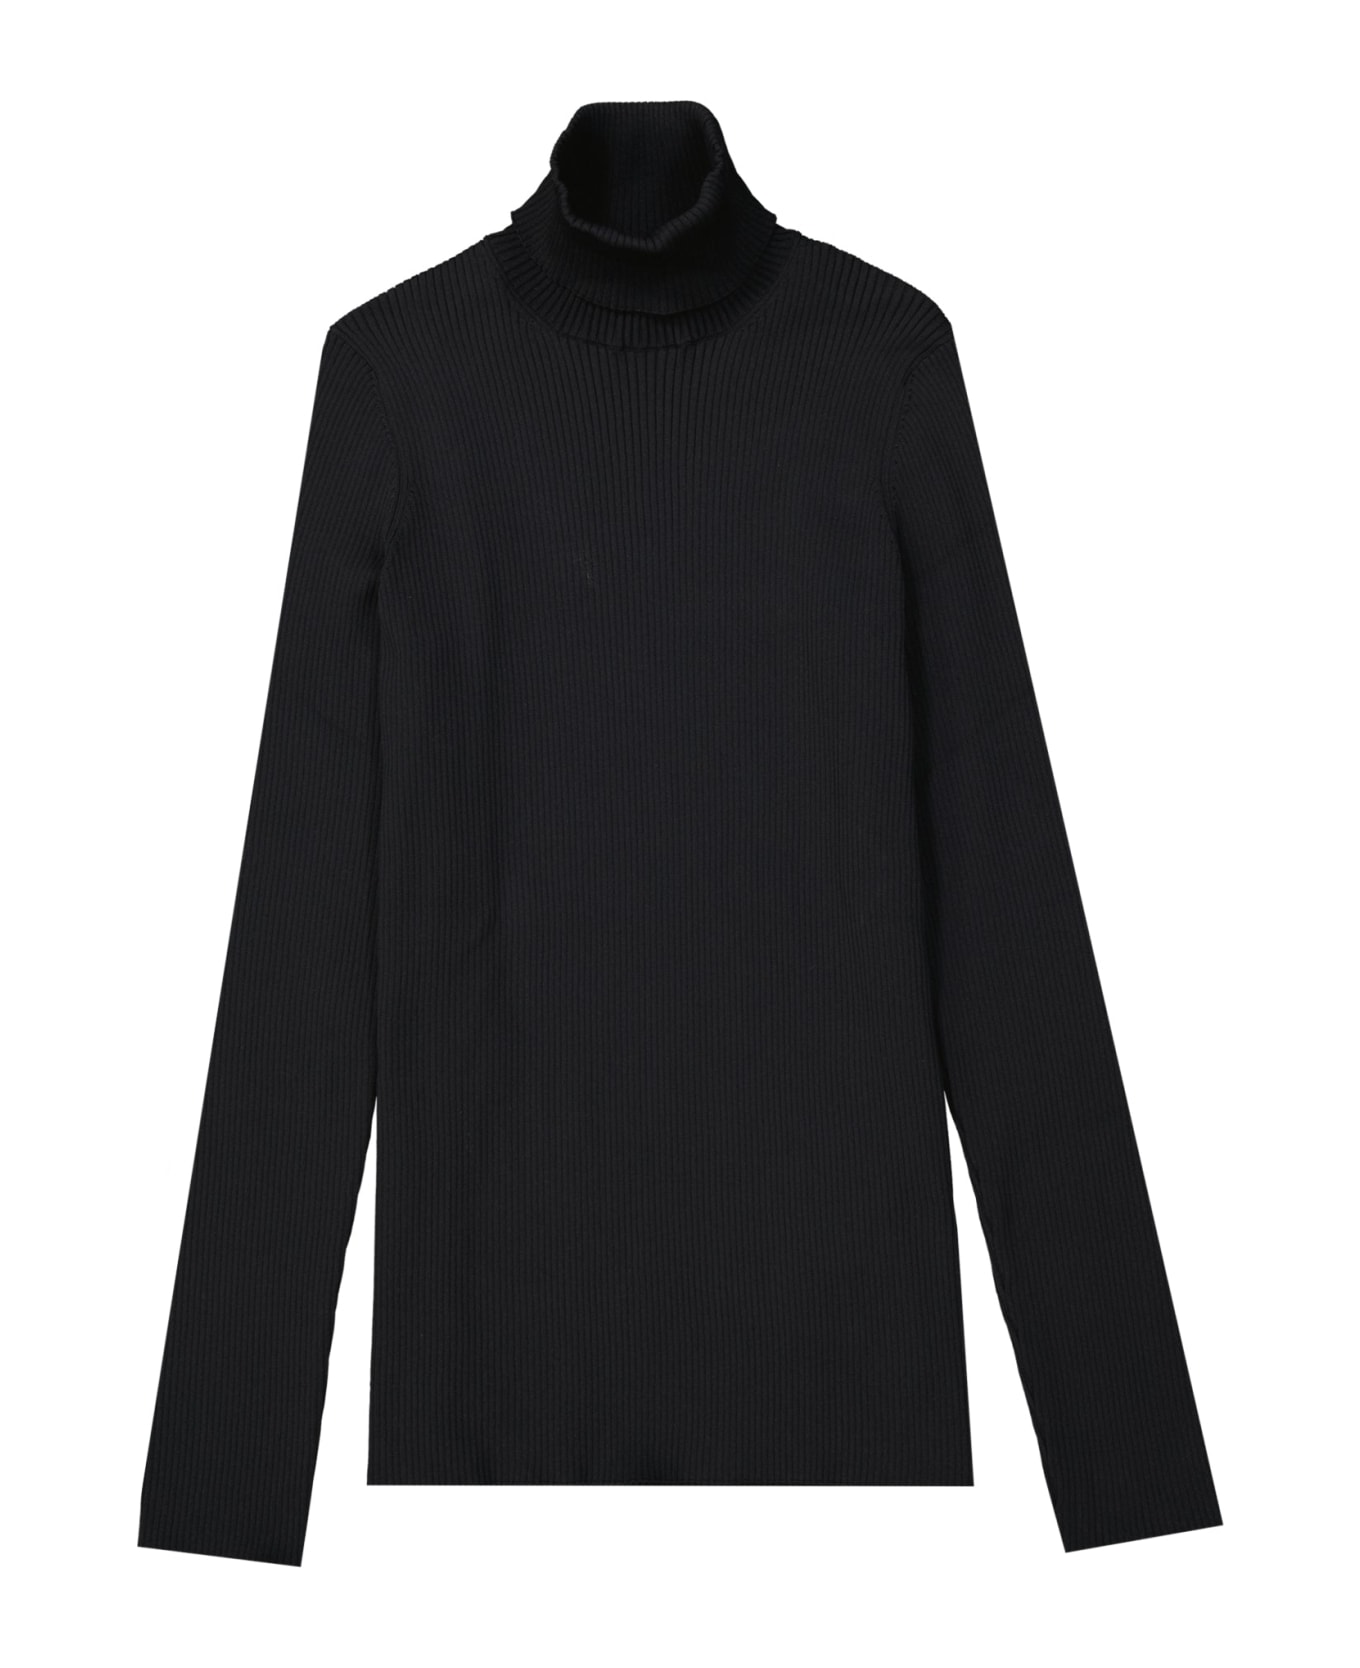 Balenciaga Long Sleeve Turtleneck Knit - Black